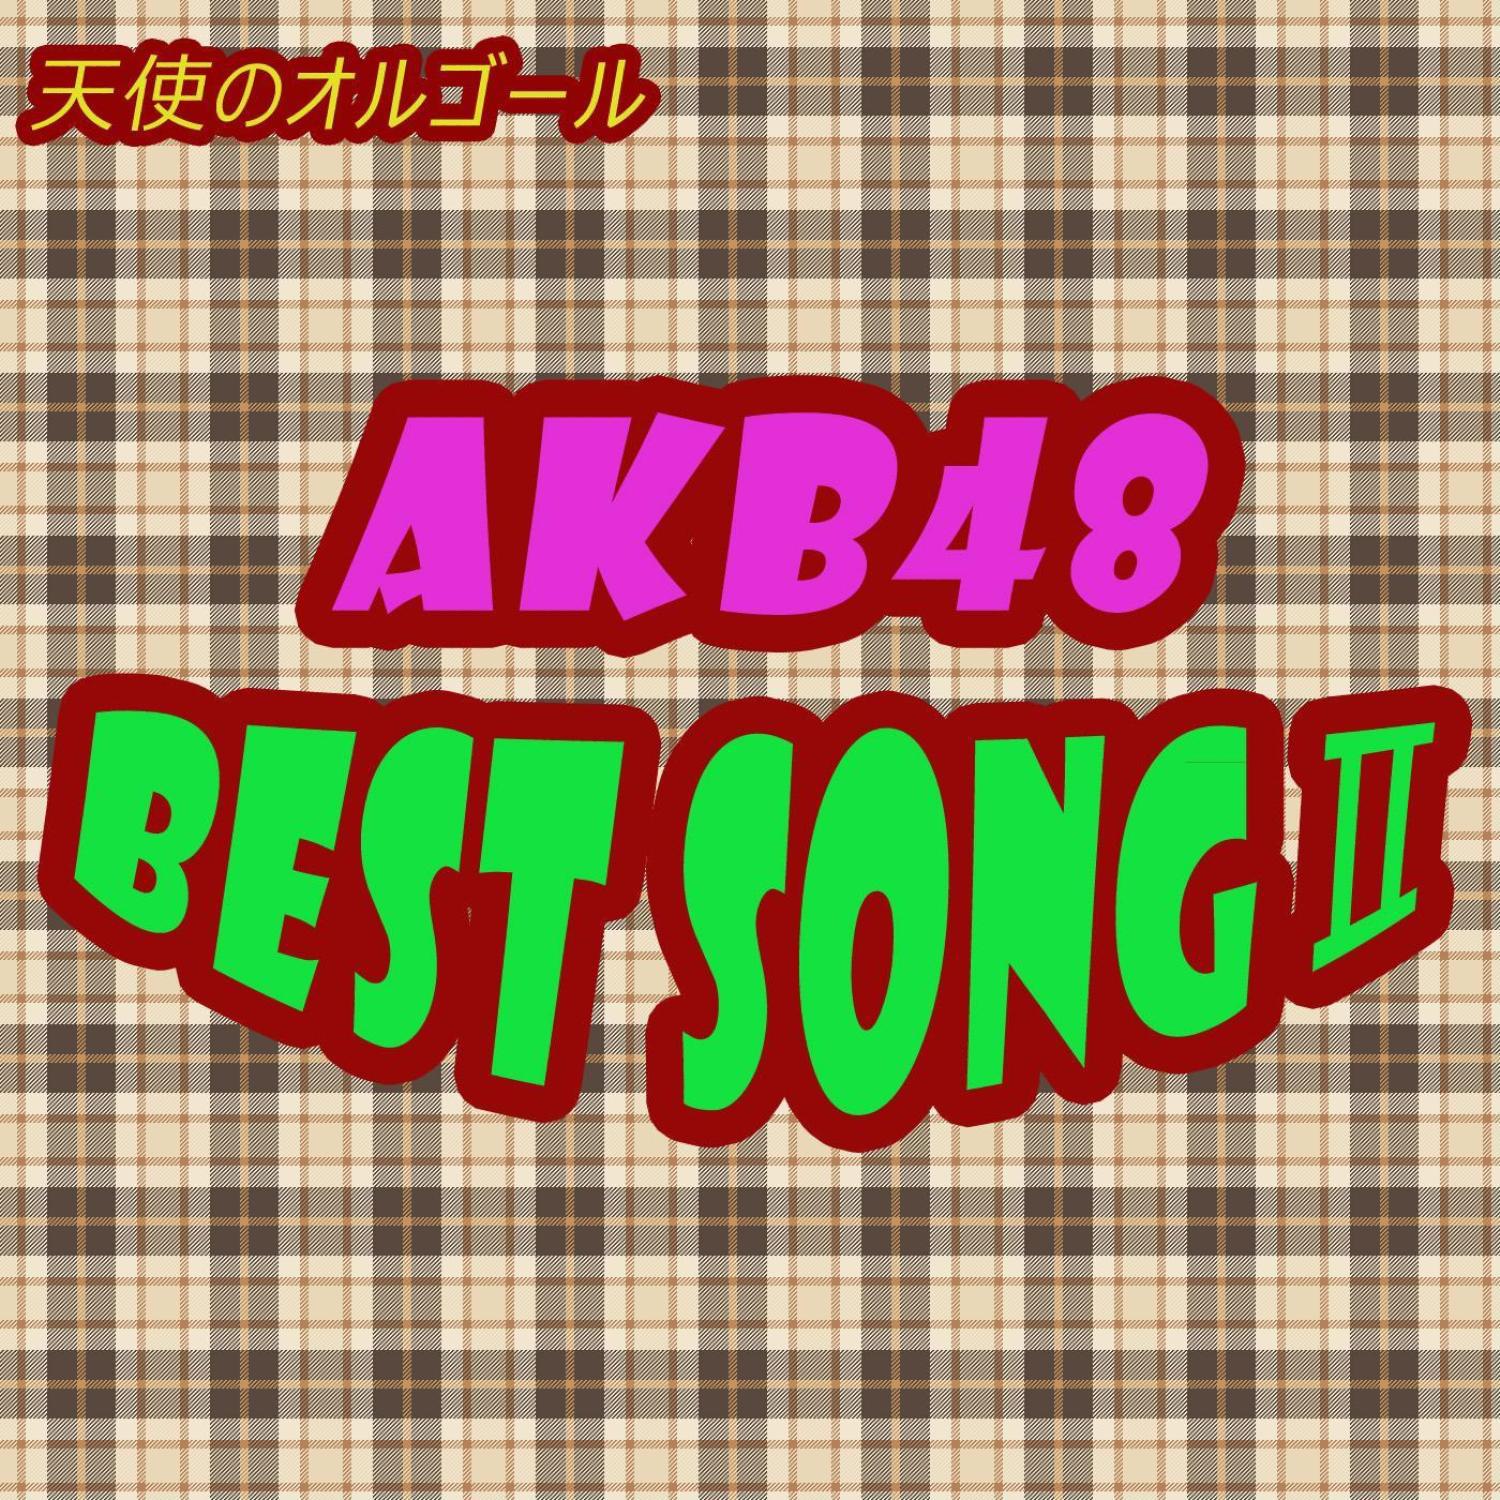 Flying Get [Originally Performed by AKB48]